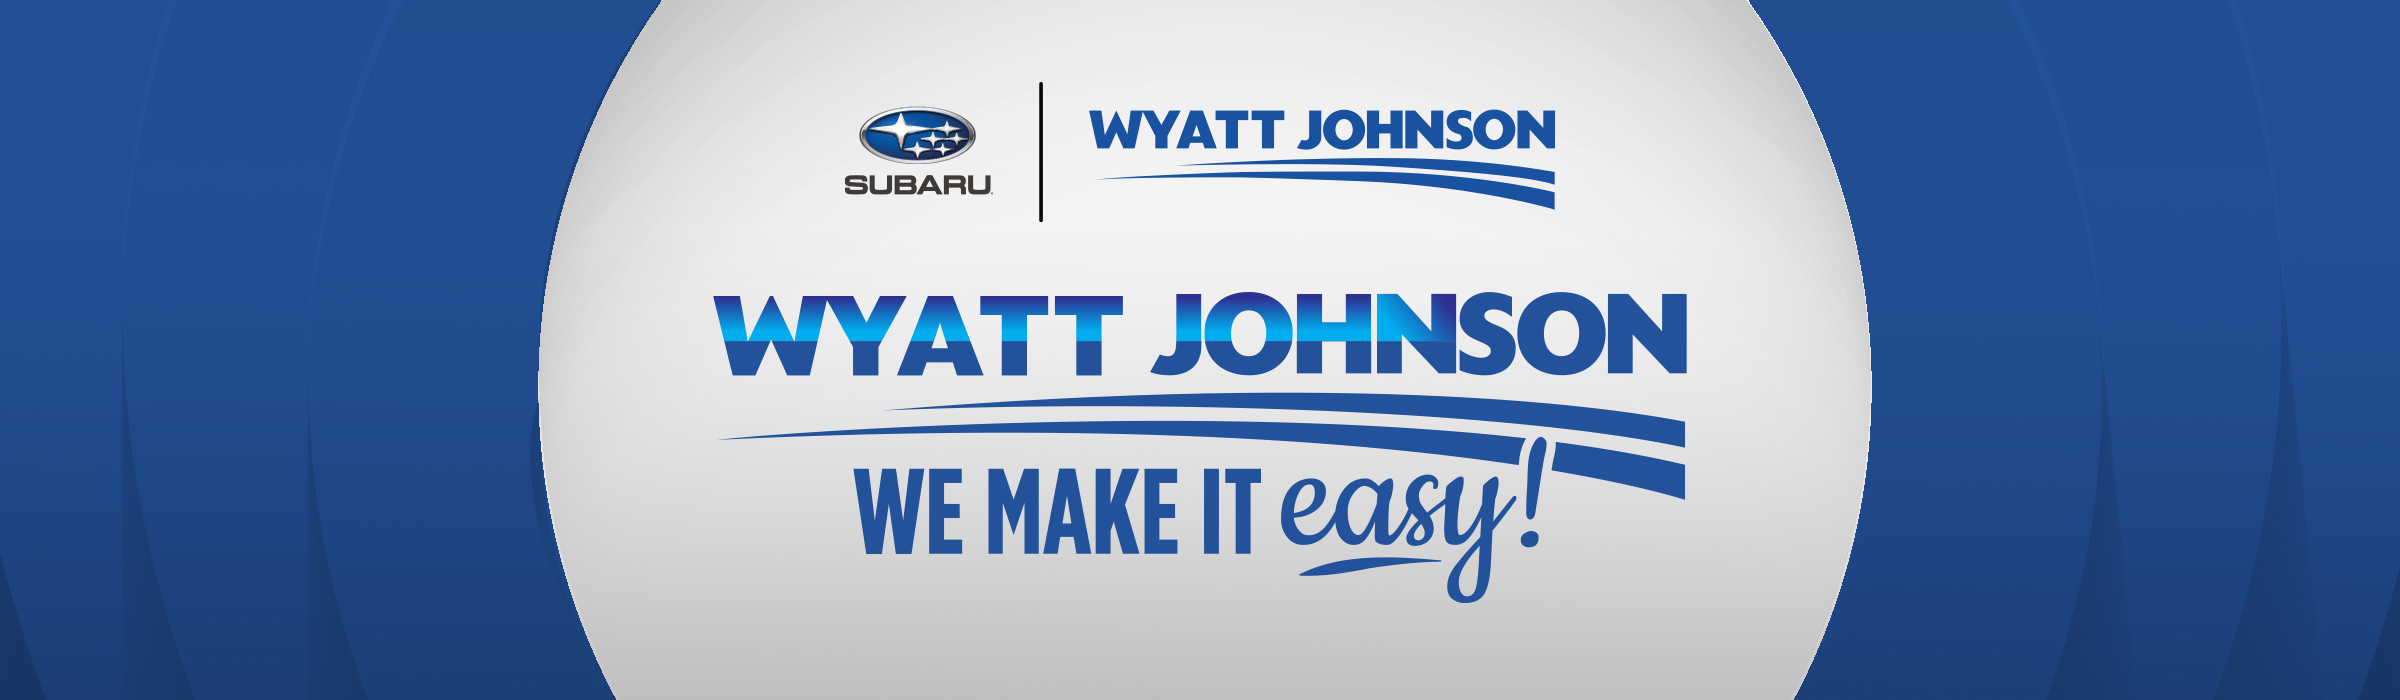 Wyatt Johnson Subaru We Make It Easy! Logo